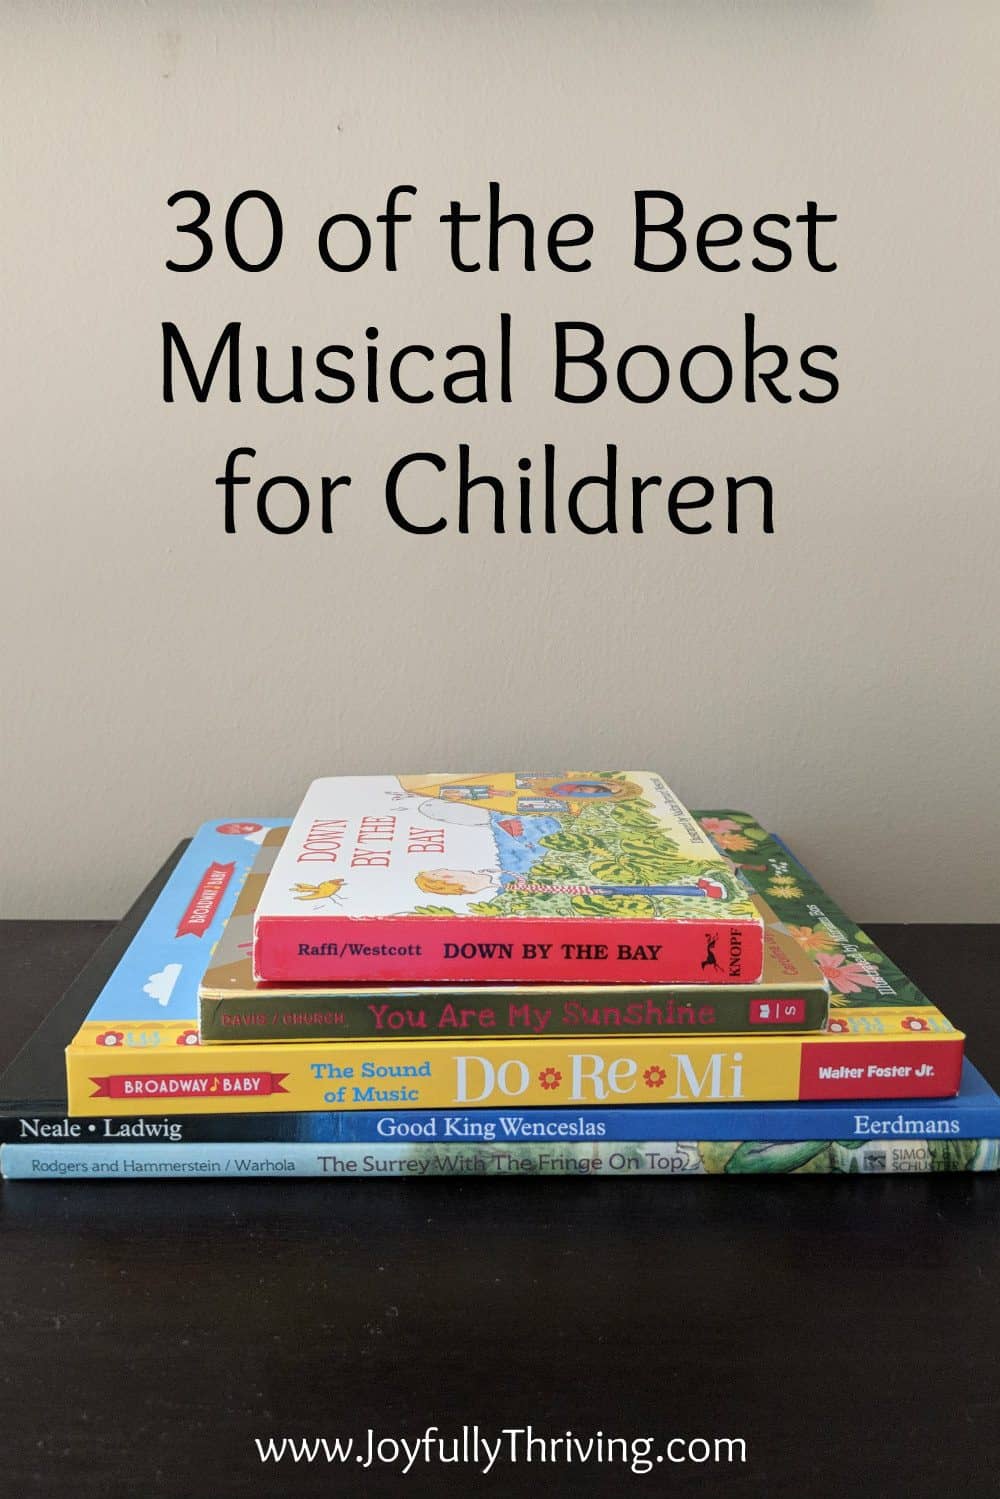 Best Musical Books for Children - Love this list! Love starting with musical books for babies and beyond!